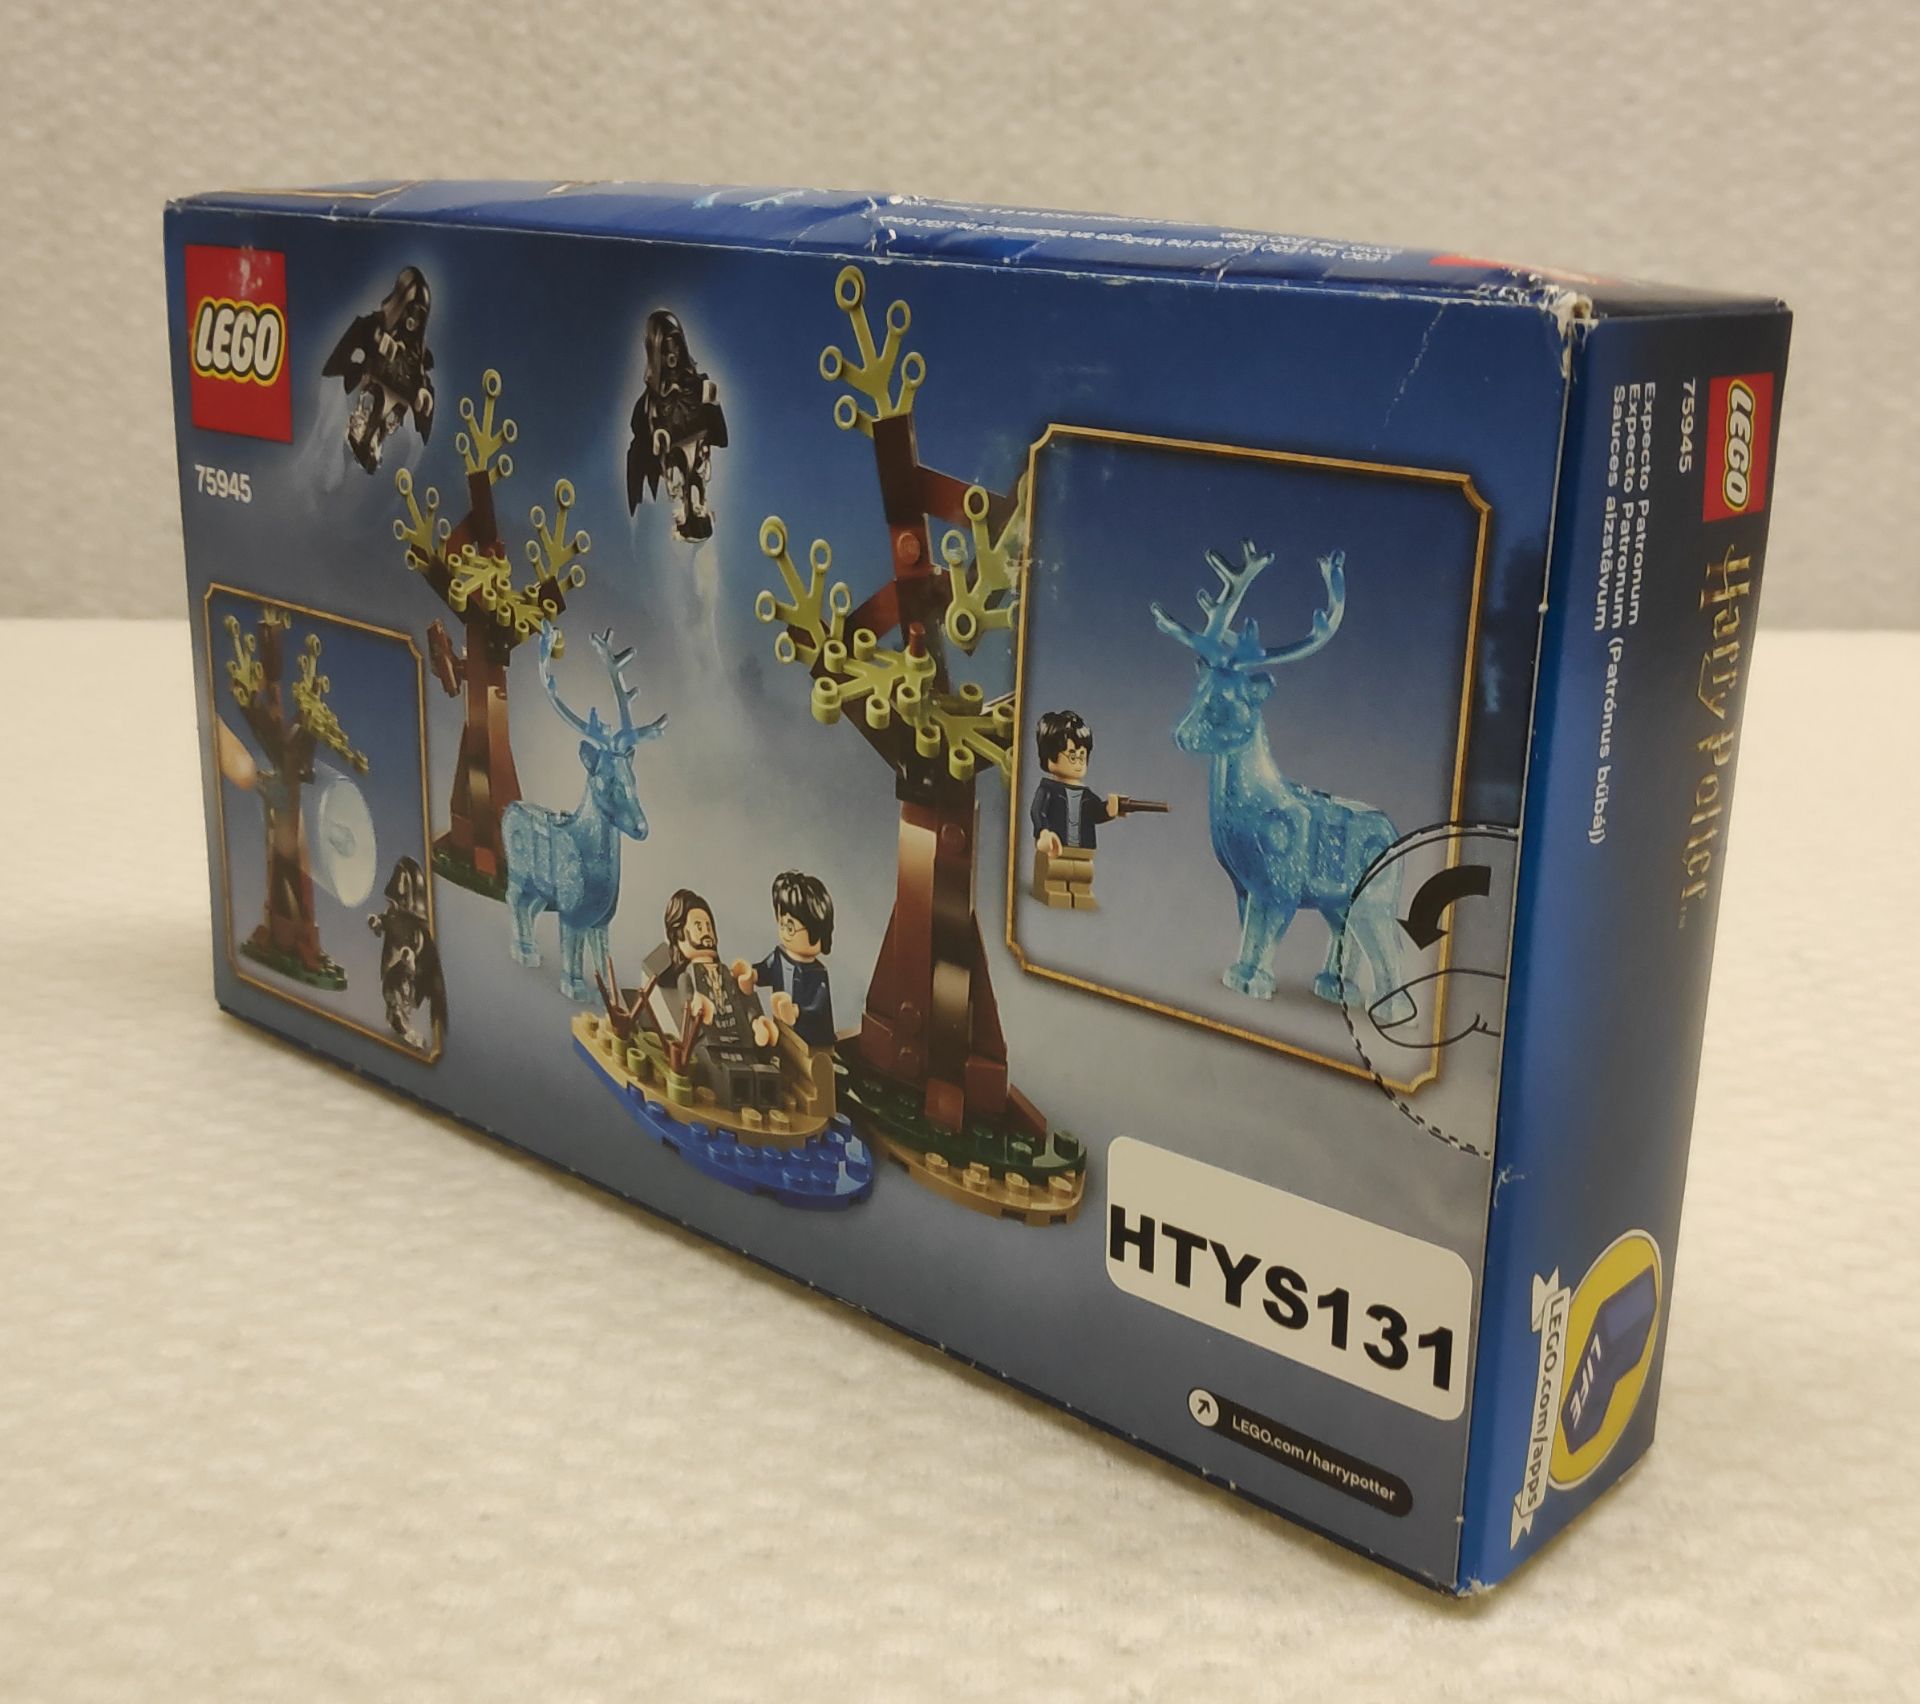 1 x Lego Harry Potter Expecto Patronum Set - New/Boxed - Set # 75945 - Image 5 of 10